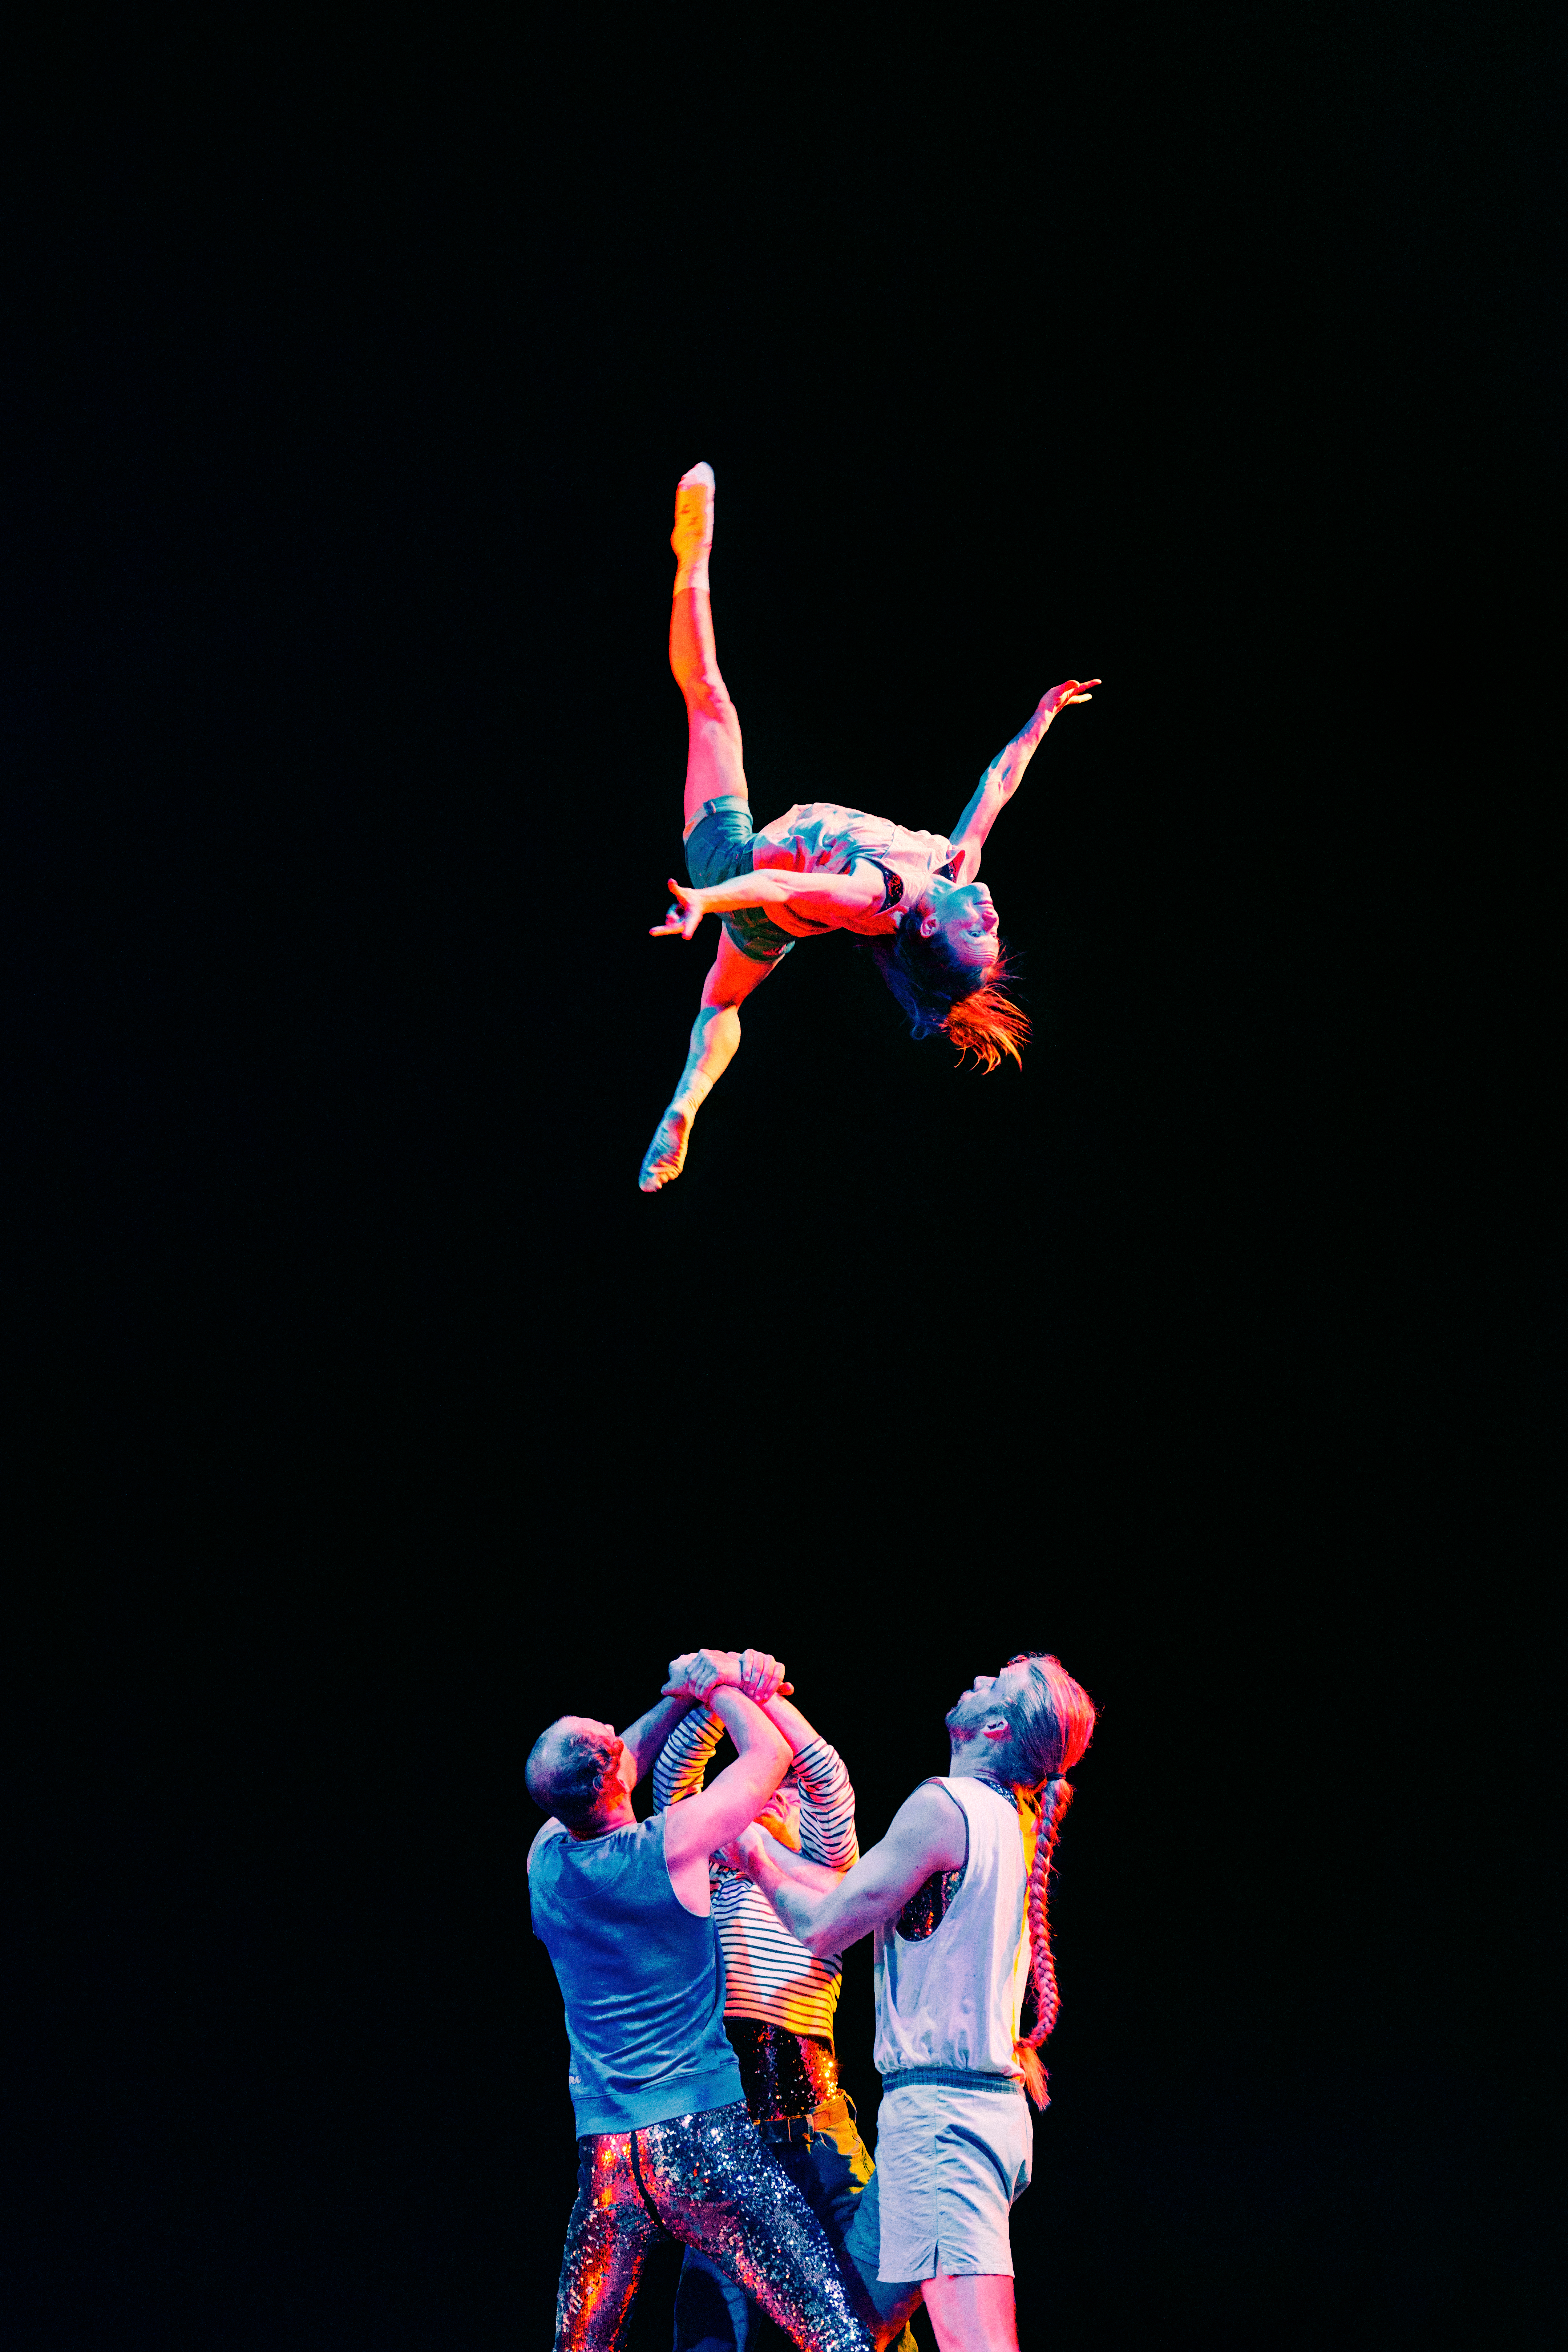 High resolution photo of banquine salto